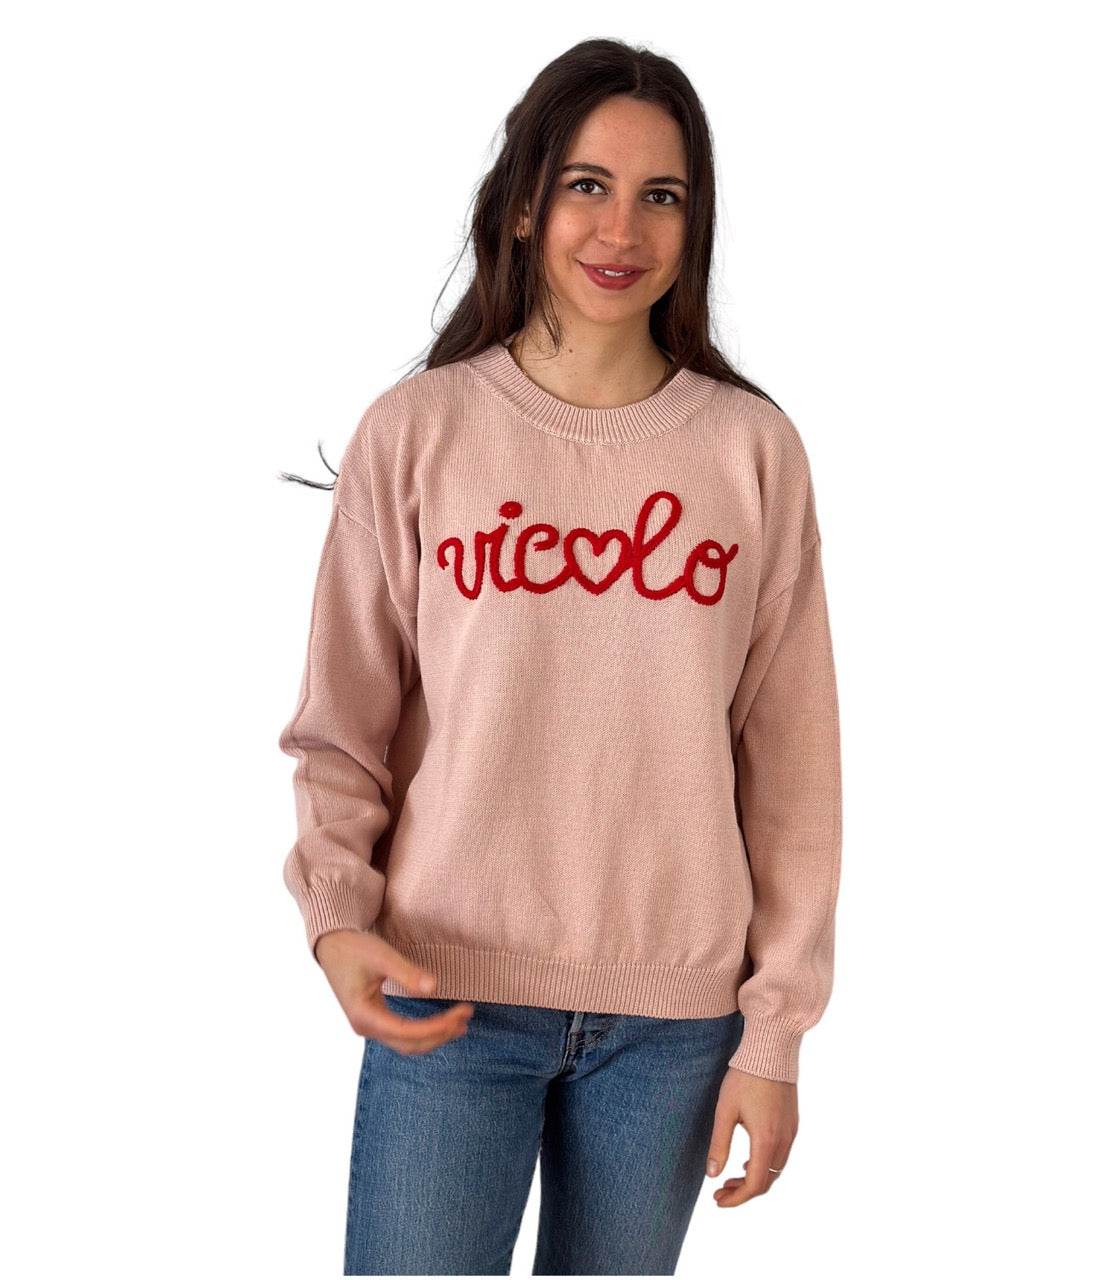 Vicolo pink embroidered logo cotton pullover